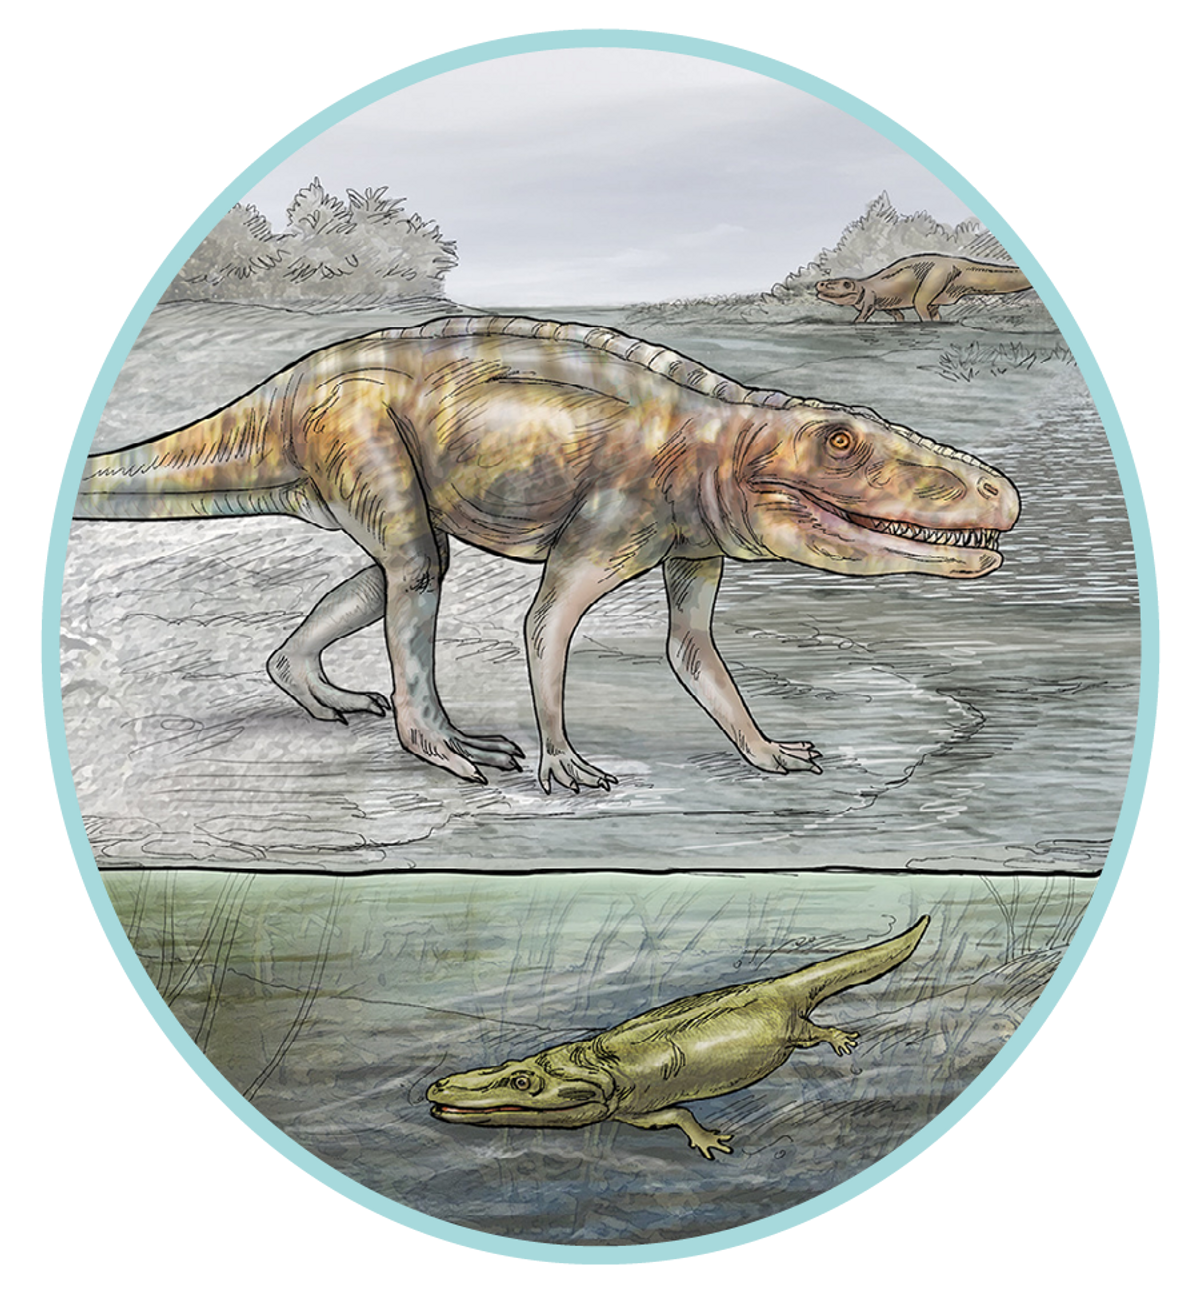 Illustration of extinct creatures from the Triassic-Jurassic period